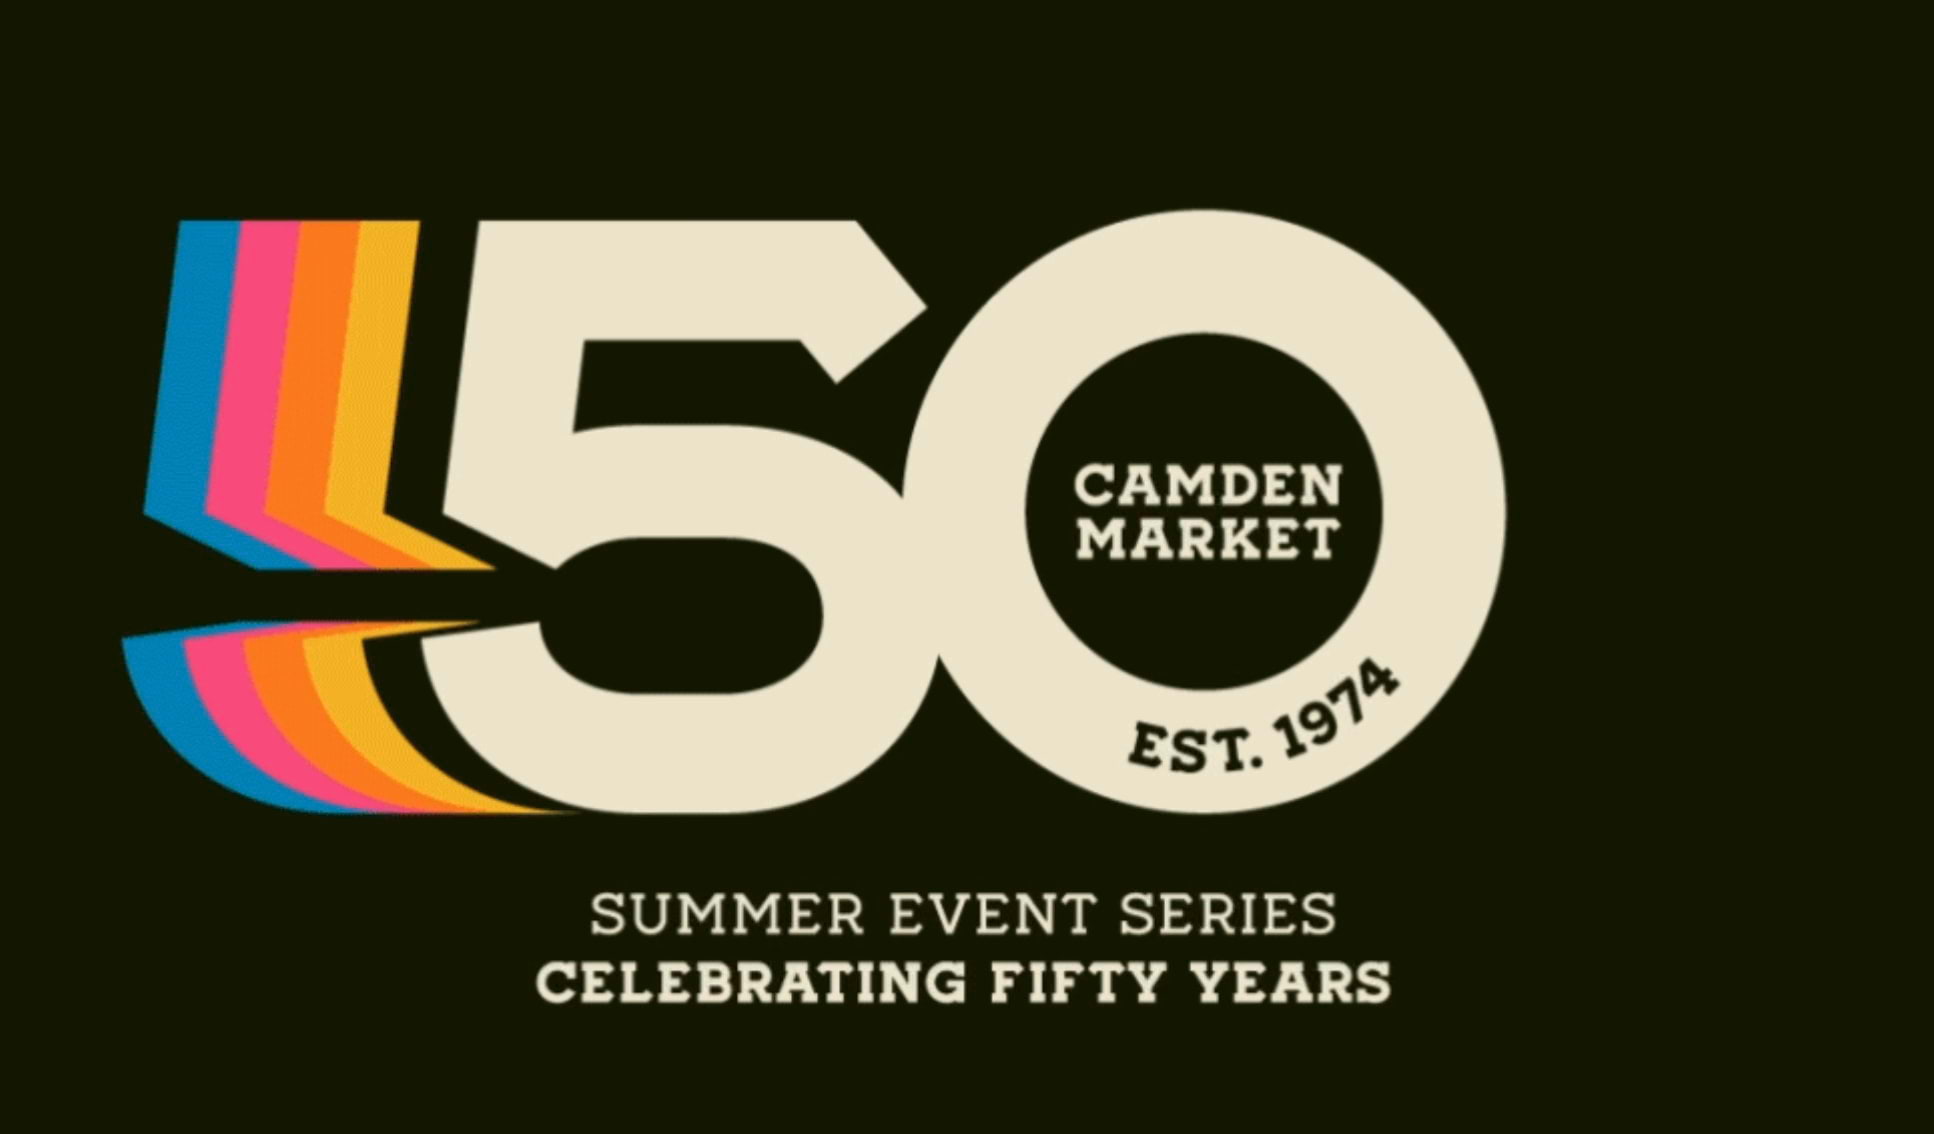 Celebrate Camden Market's 50th anniversary this summer